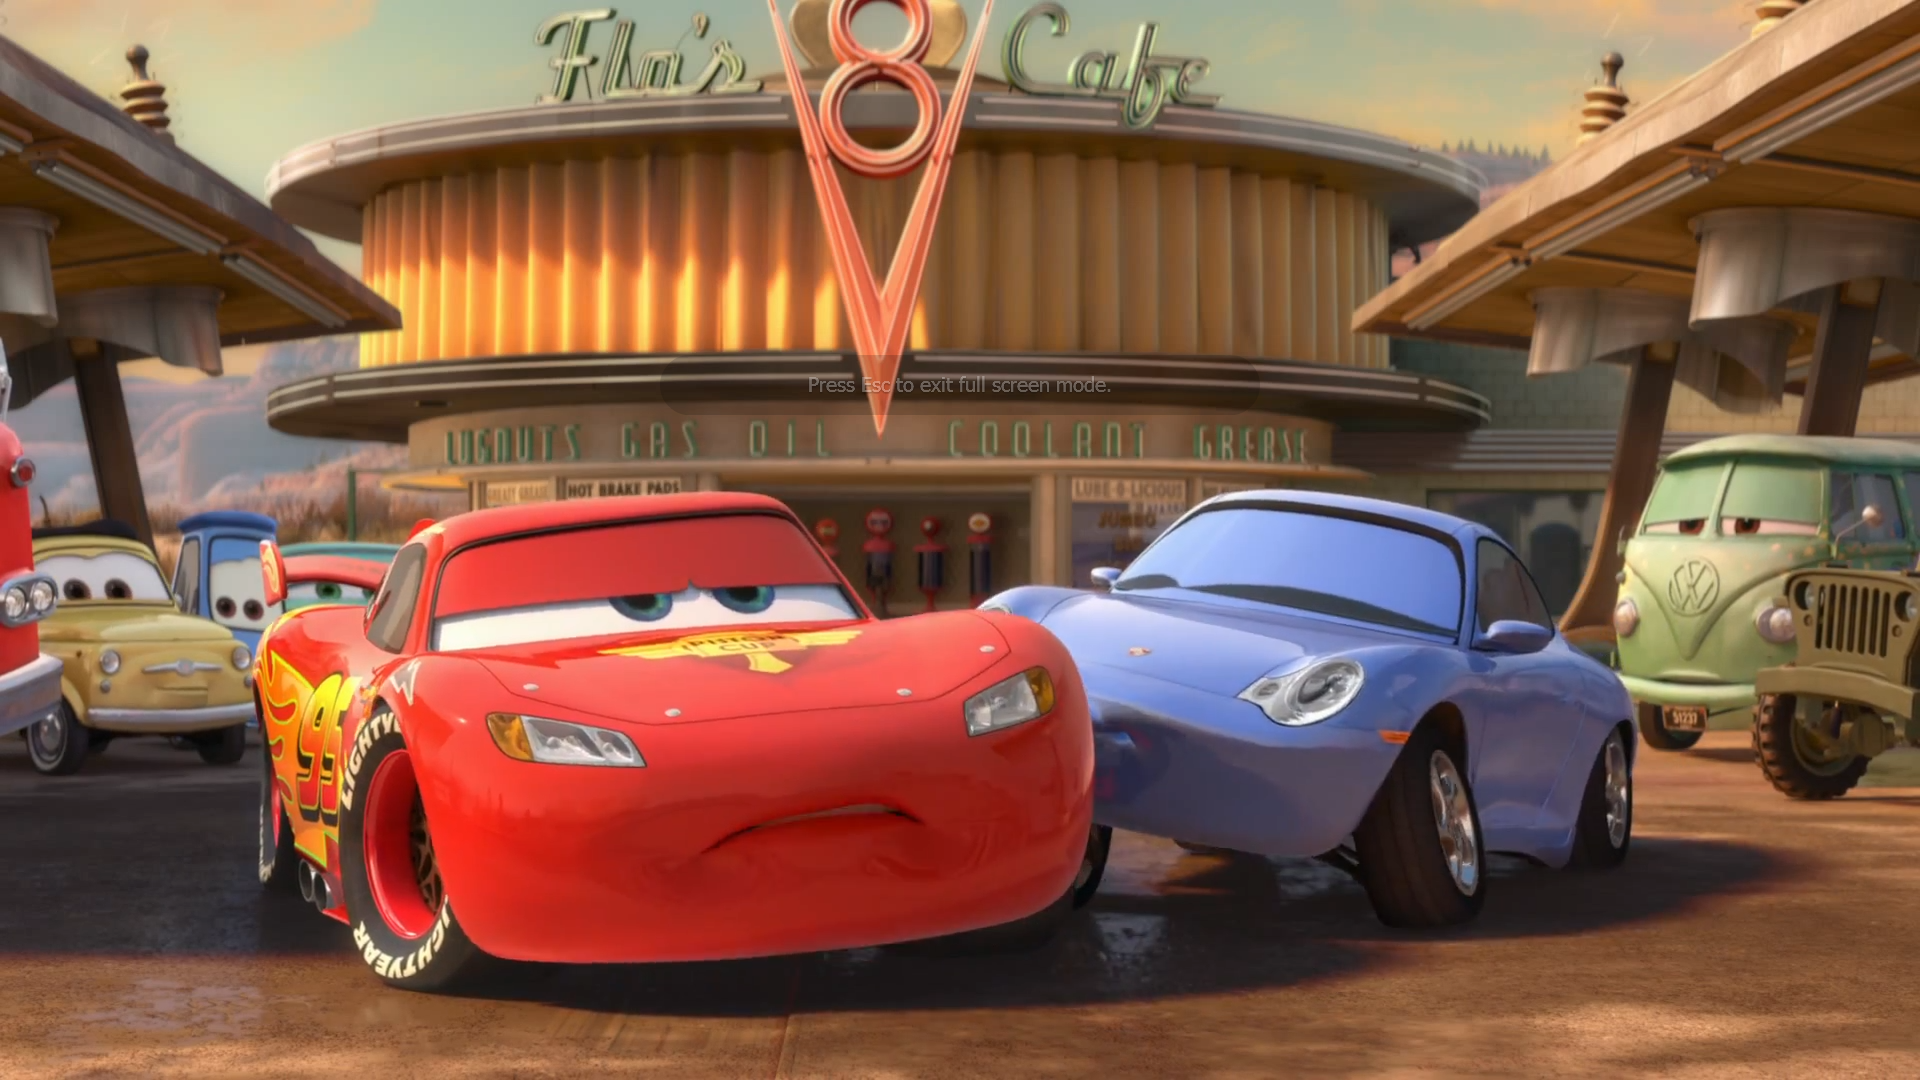 DisneyPixar Cars 3 Sally with Tattoo Radiator Springs Classic Review   YouTube